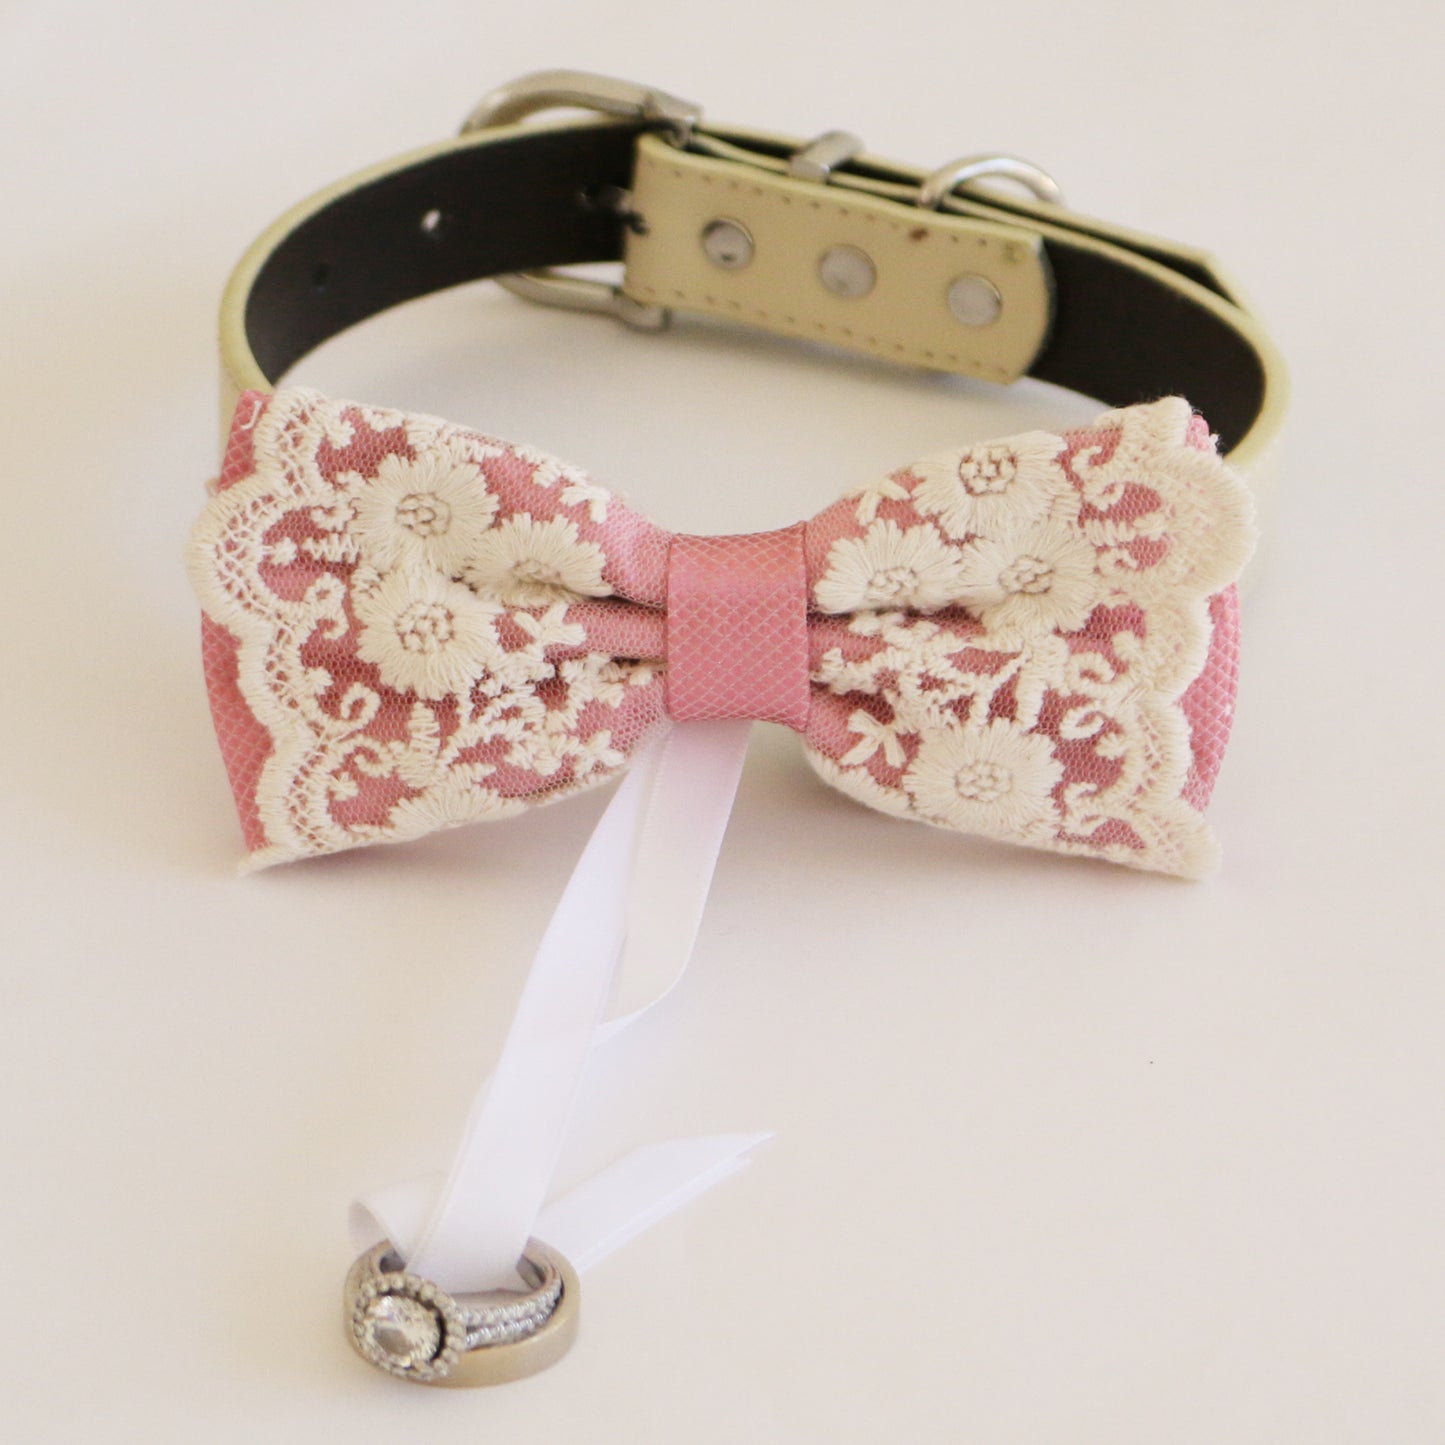 handmade dusty rose bow tie collar Leather collar Dog ring bearer ring bearer adjustable handmade M to XXL collar bow, Proposal , Wedding dog collar